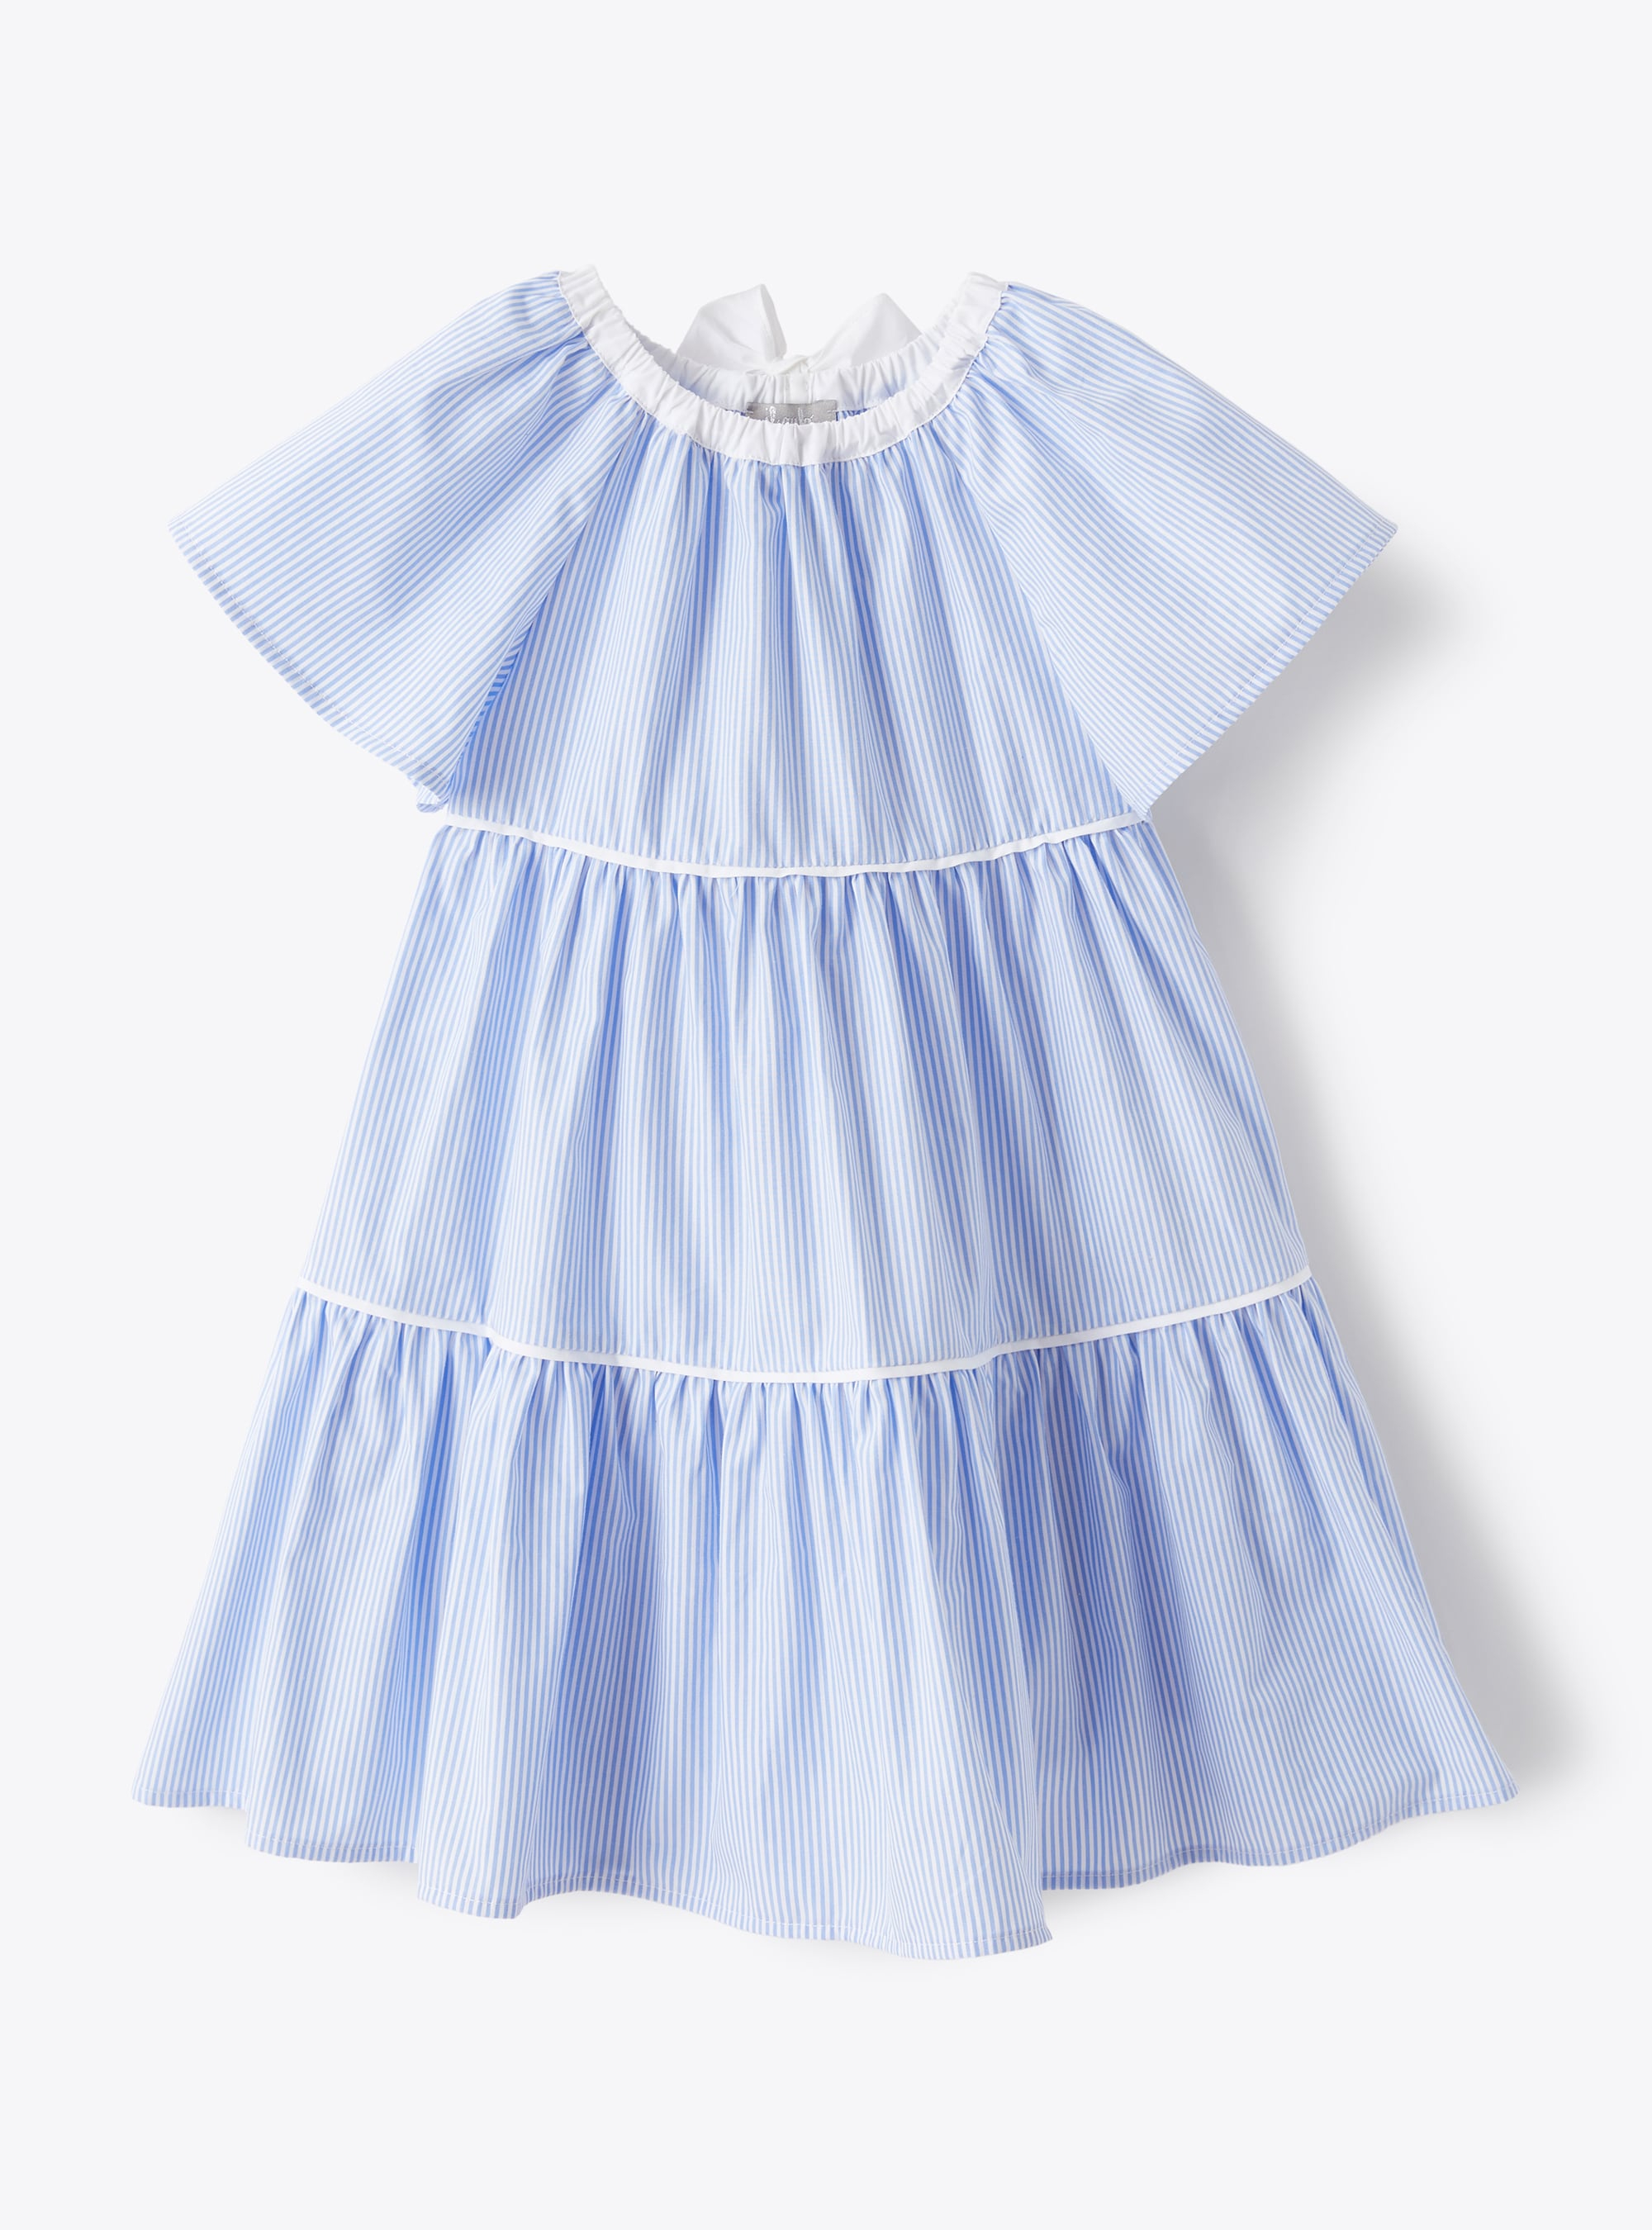 Tiered dress in a light-blue stripe - Light blue | Il Gufo